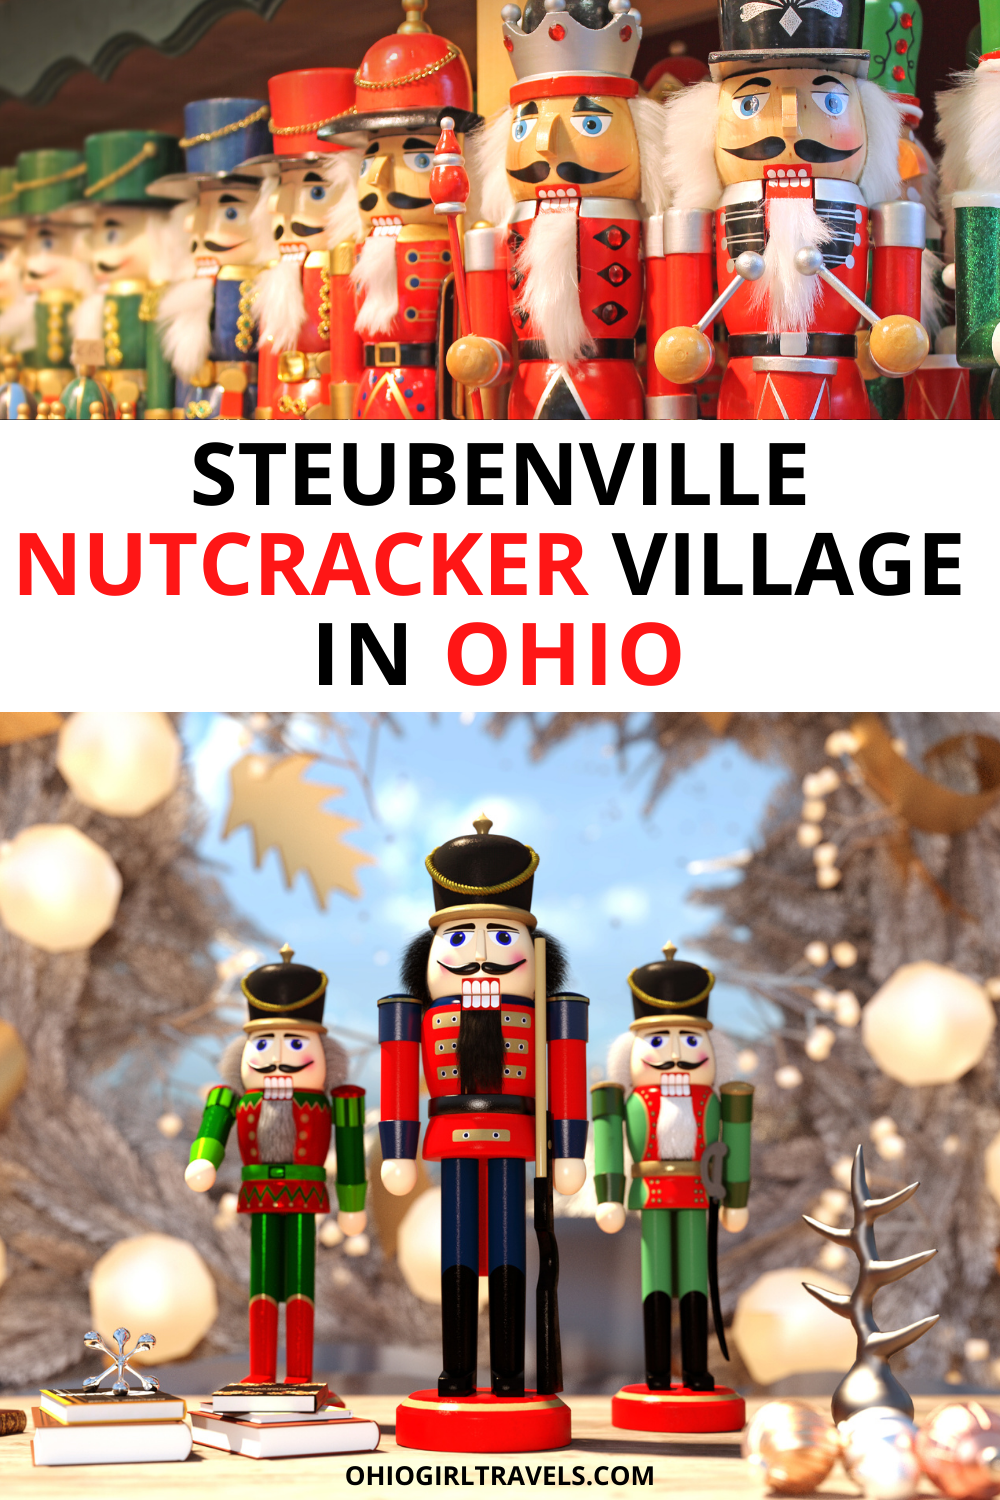 Steubenville Nutcracker Village